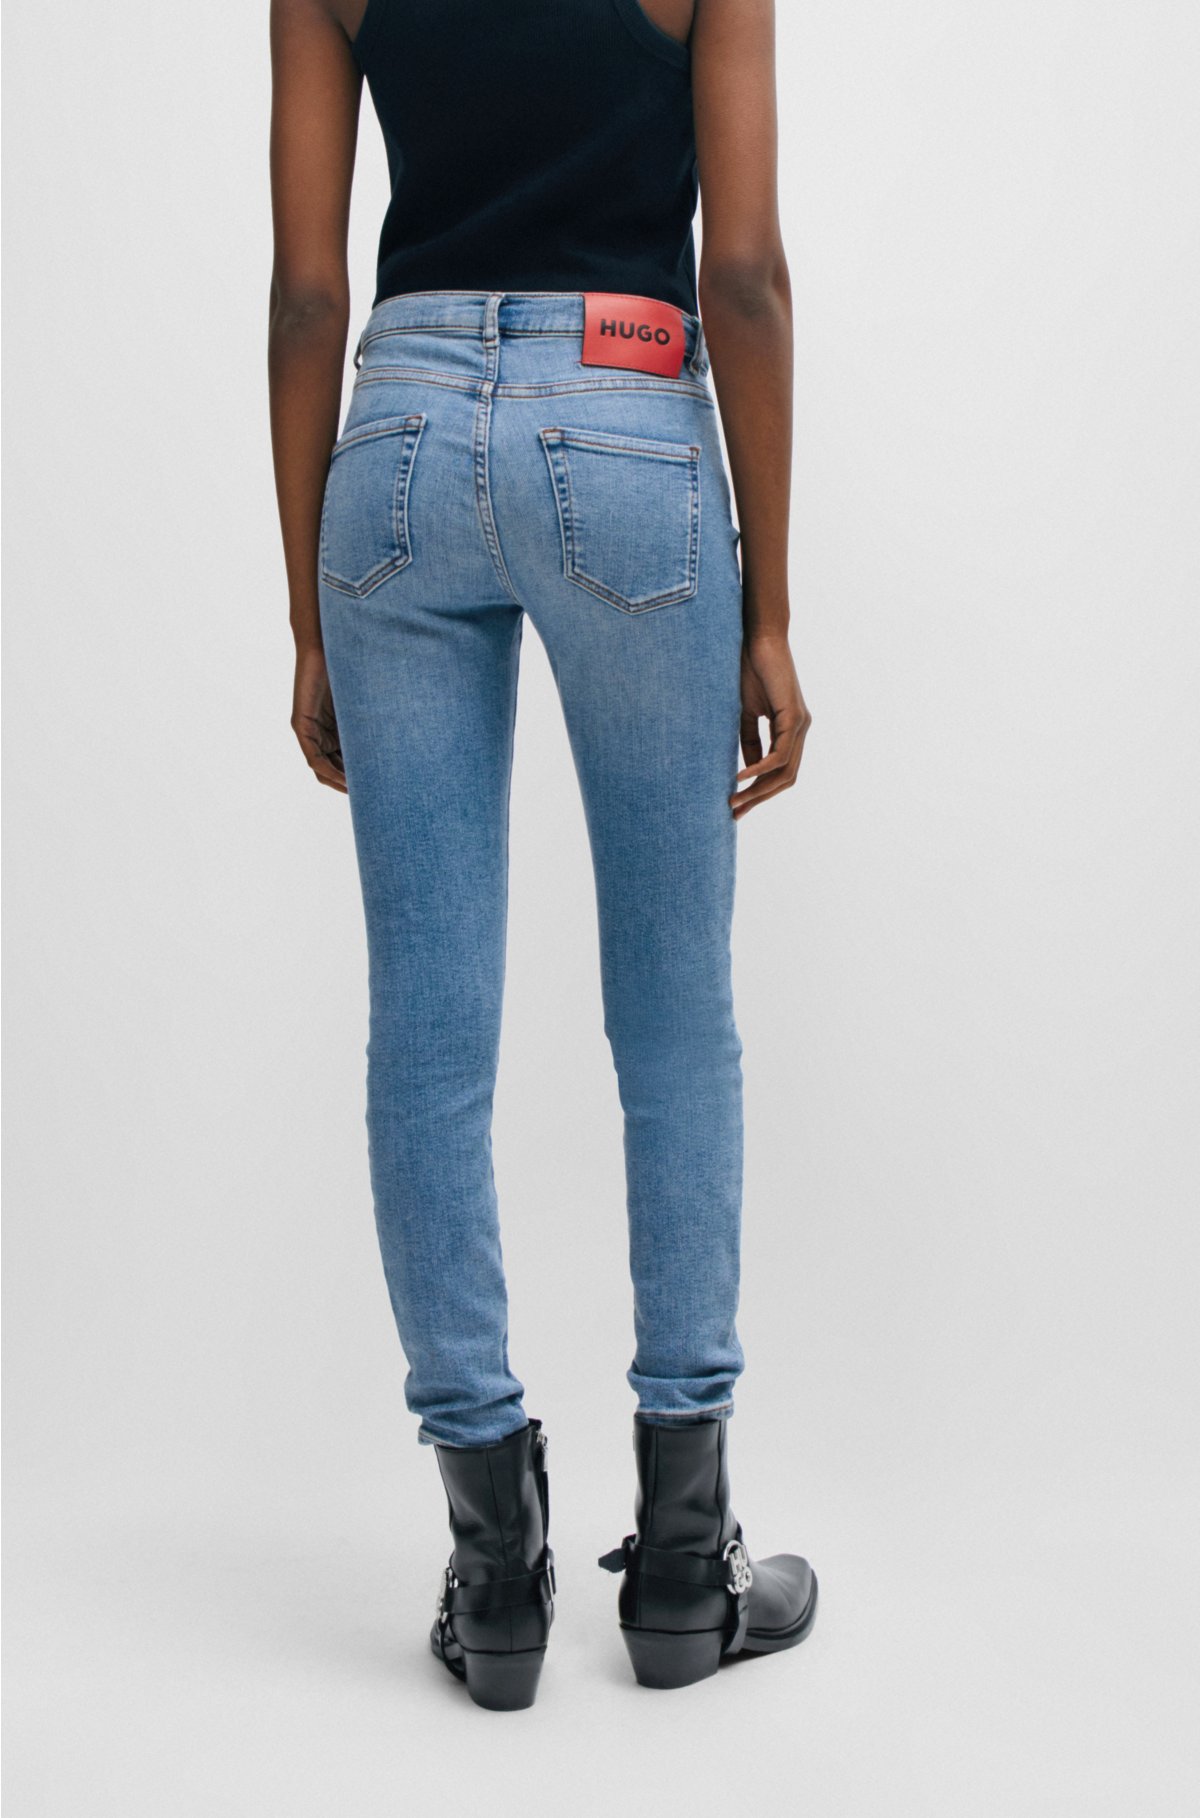 jeans in Skinny-fit denim - HUGO blue stretch